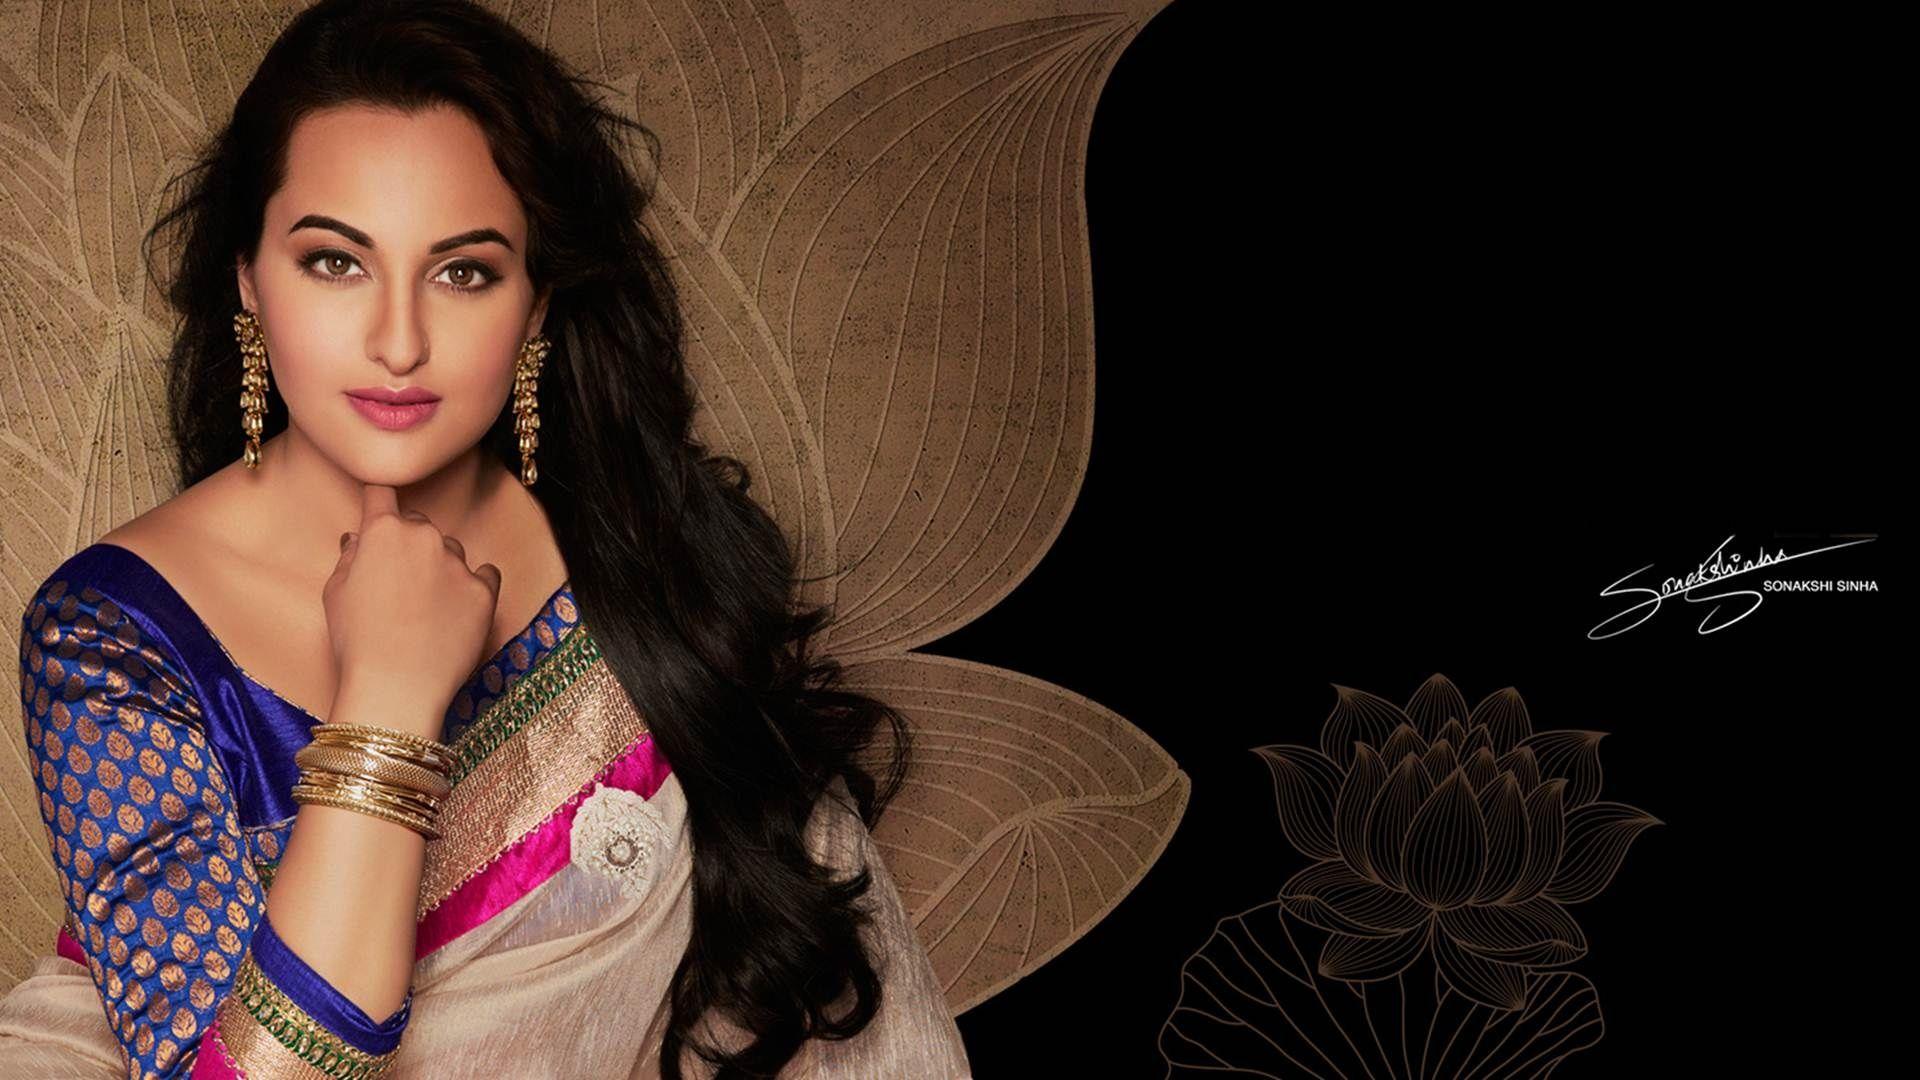 Full HD Bollywood Actress Wallpapers - Wallpaper Cave